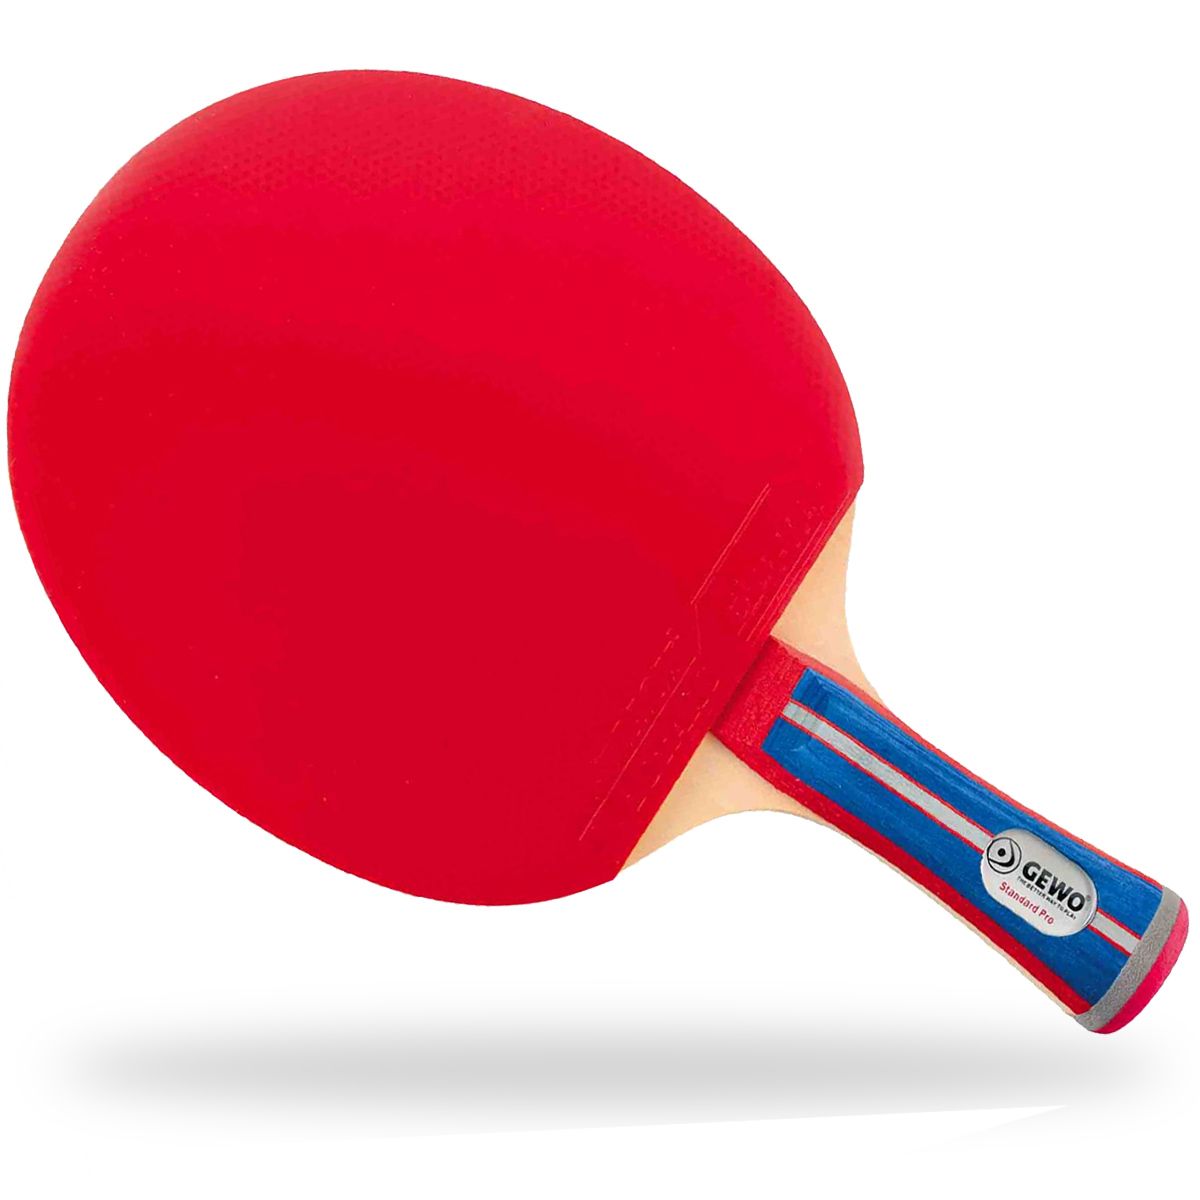 GEWO Racket Standard Pro  - Flared Table Tennis Racket